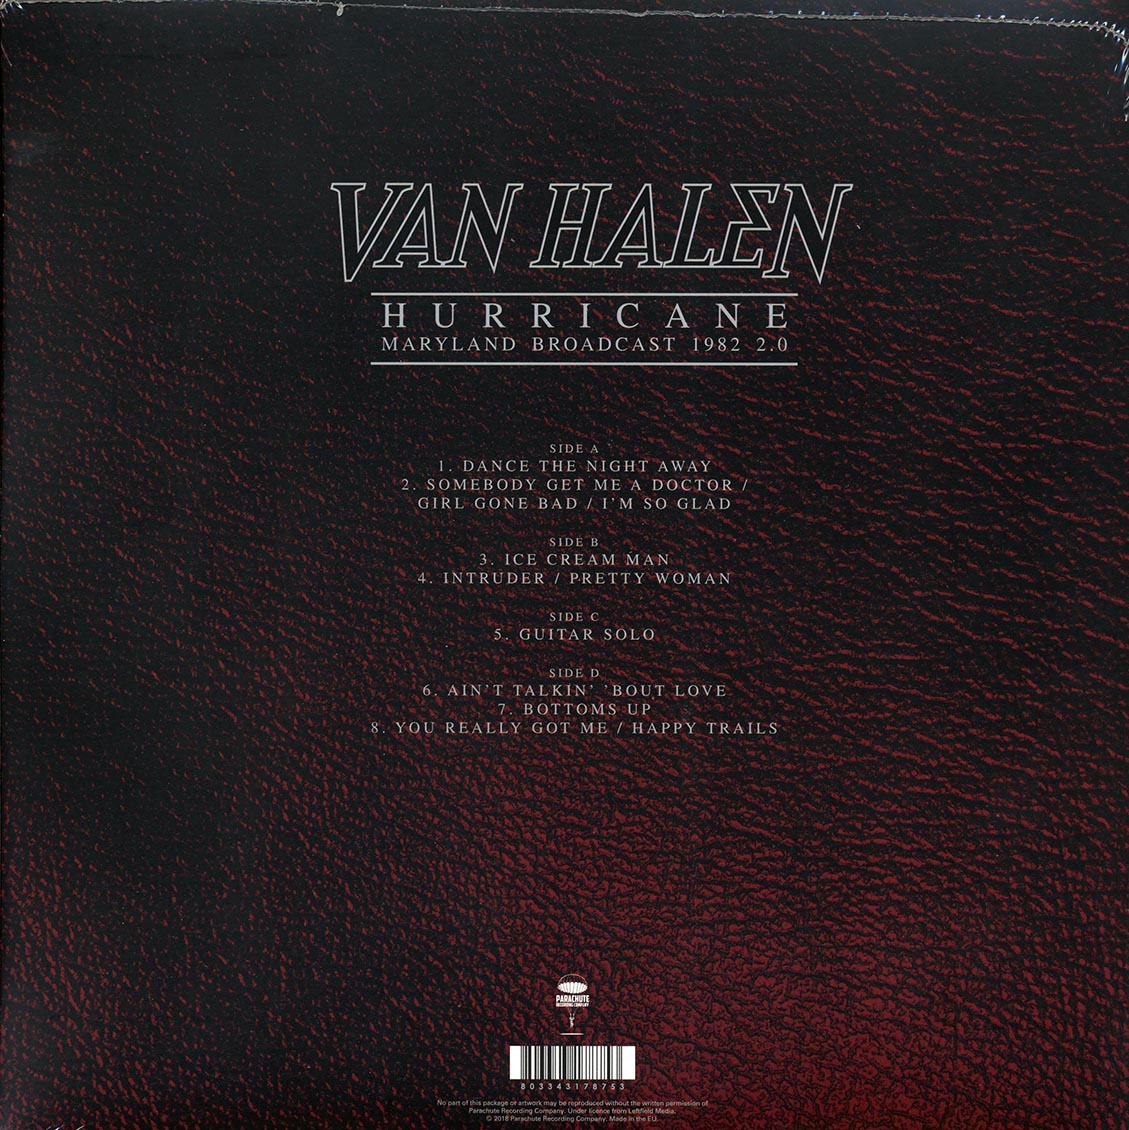 Van Halen - Hurricane: Maryland Broadcast 1982 2.0, Capital Center, Landover, MD October 1982 (ltd. ed.) (2xLP) (clear vinyl) - Vinyl LP, LP